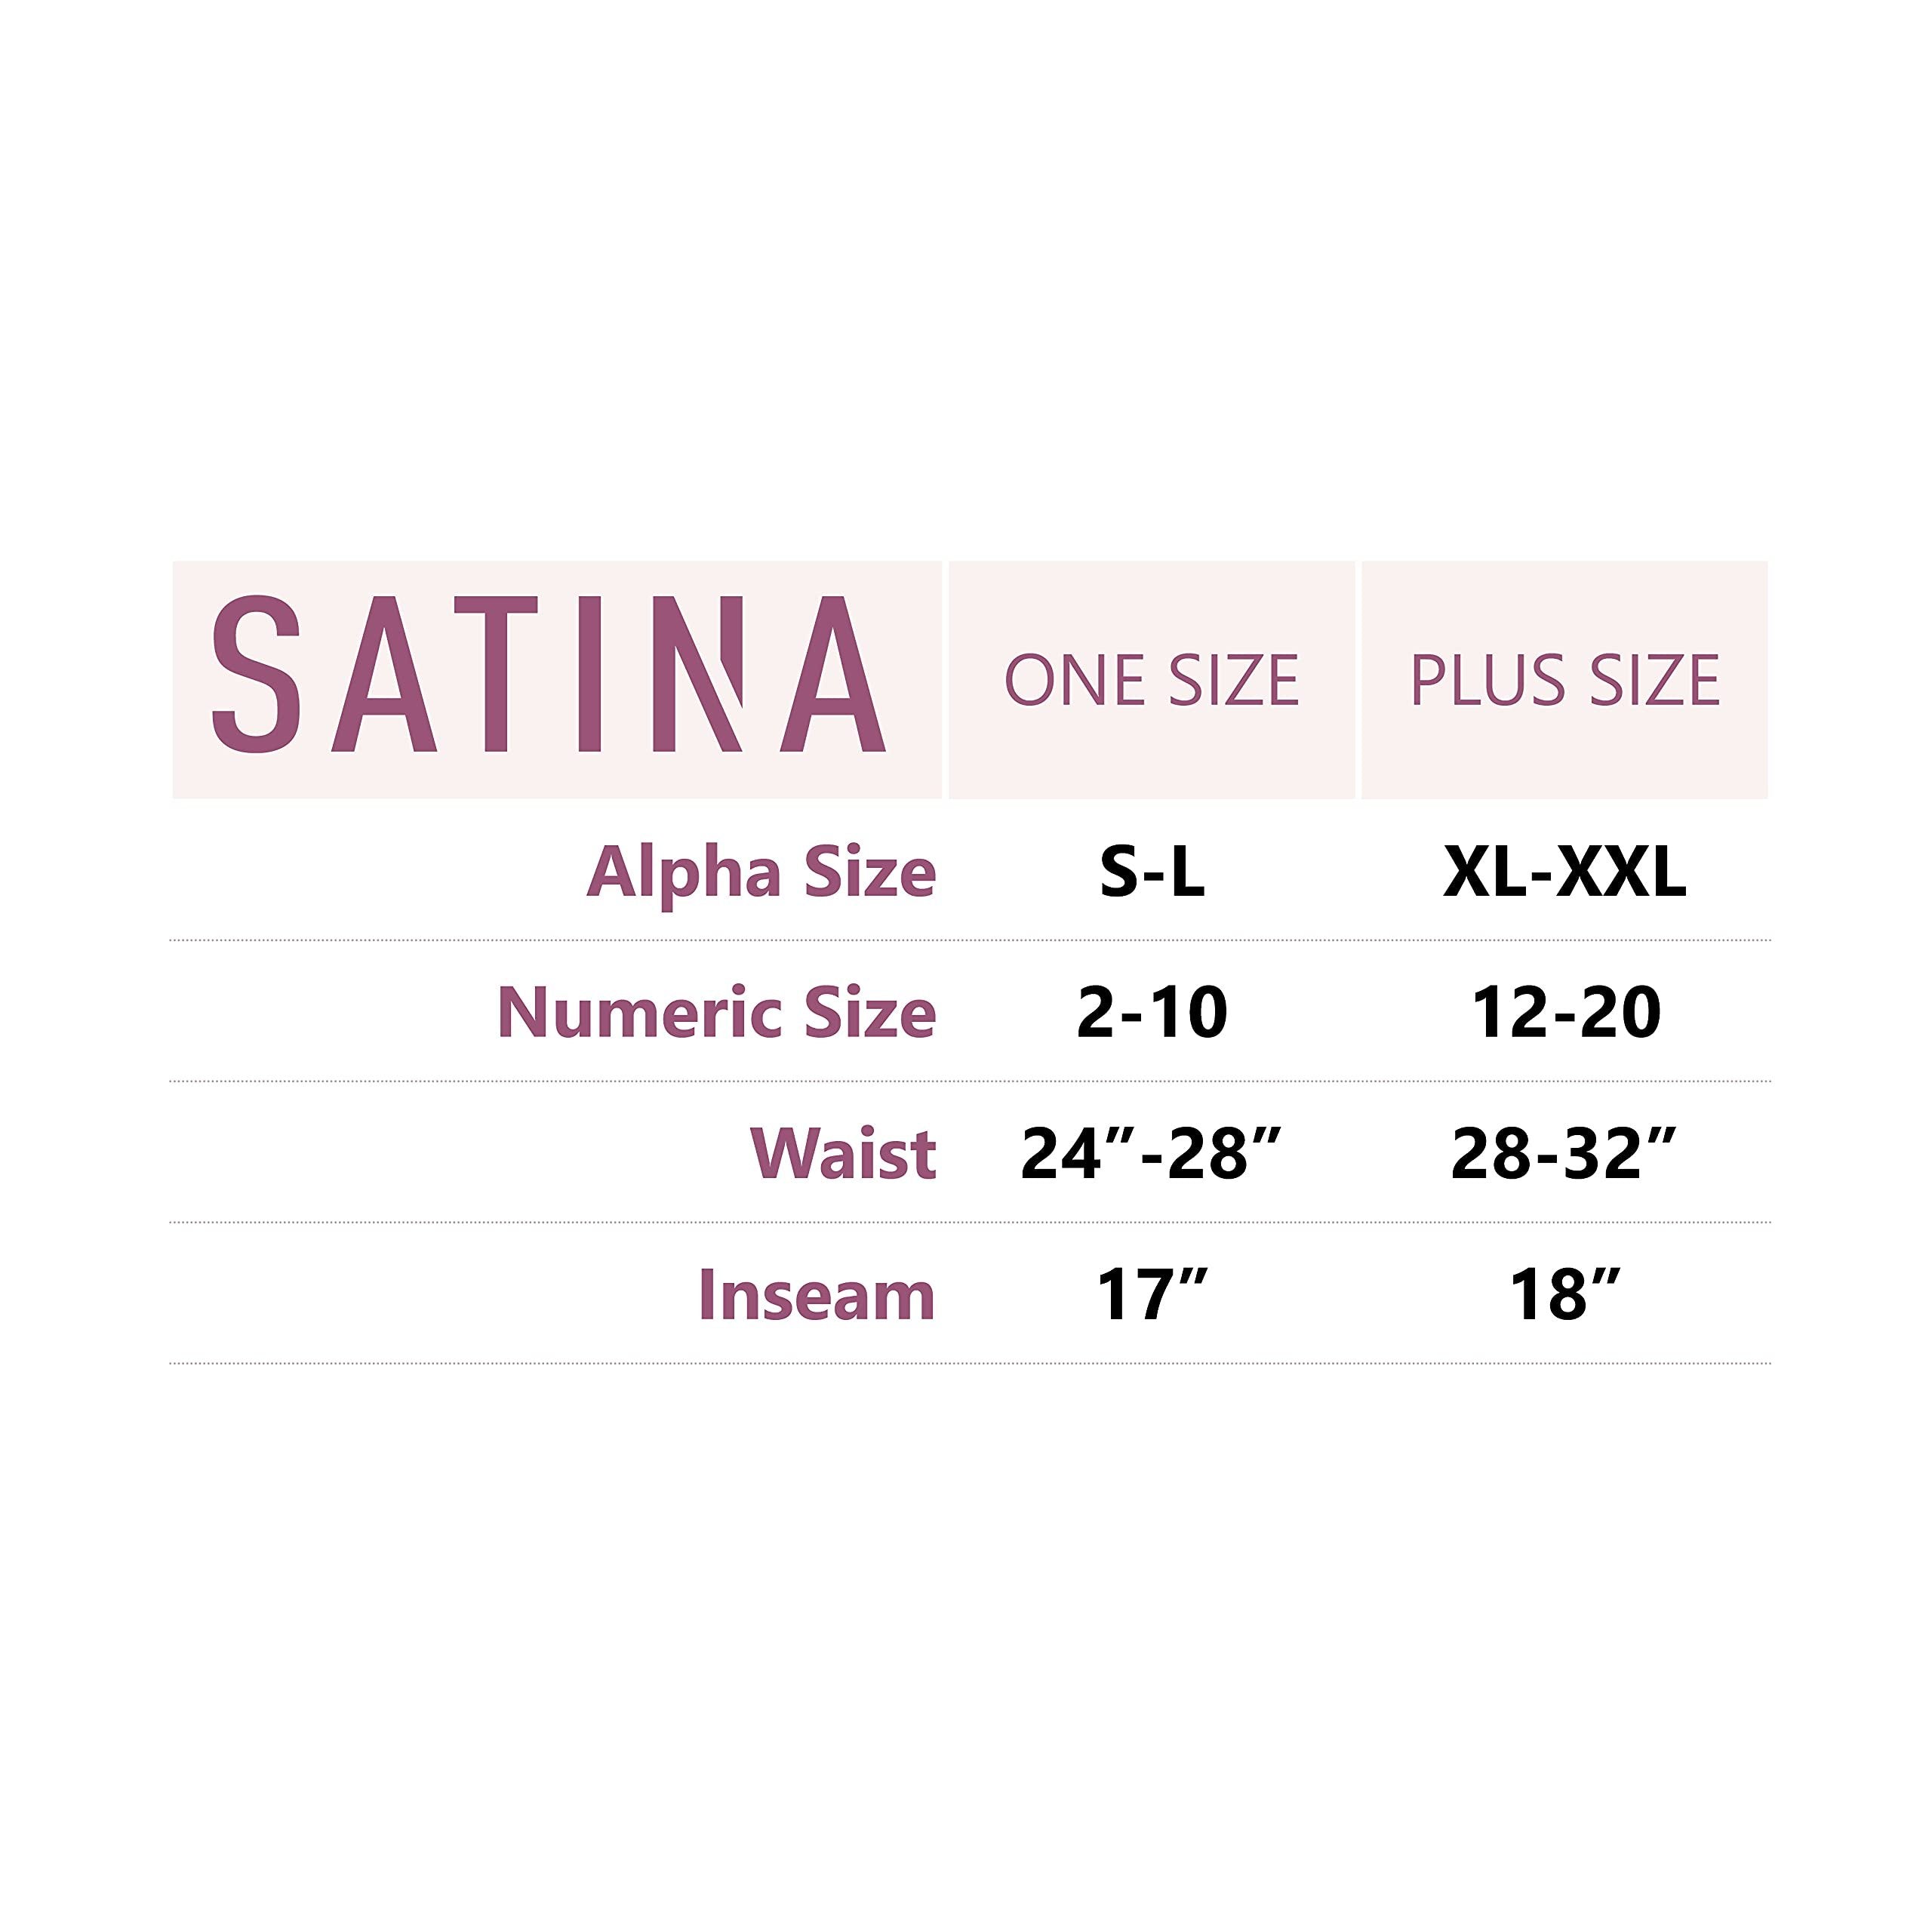 SATINA High Waisted Leggings - Gray - Full Length - Size One - Free Shipping & Returns